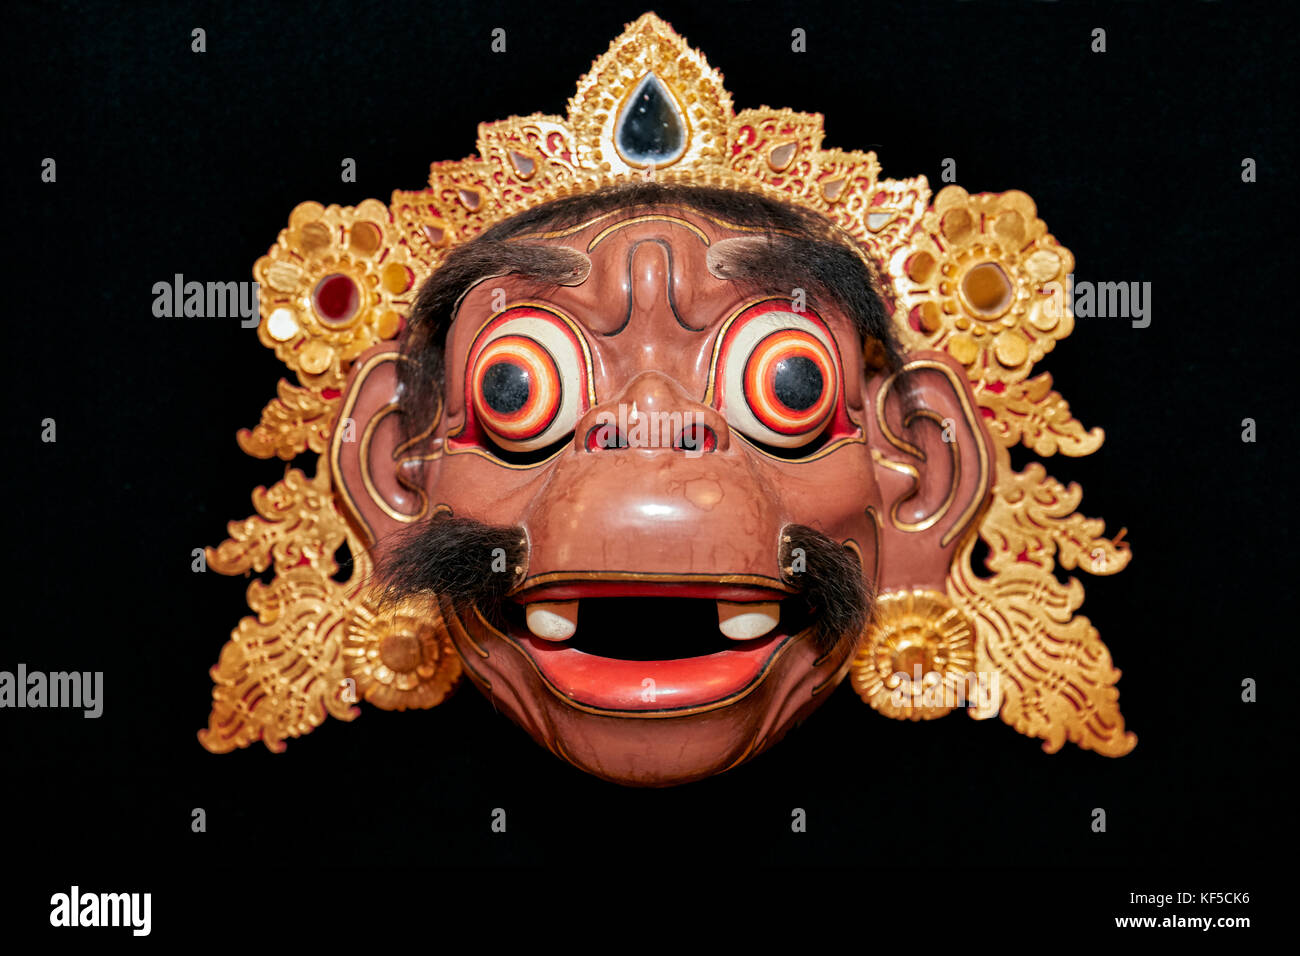 Delem mask made using real human facial hair. Setia Darma House of Masks and Puppets, Mas, Ubud, Bali, Indonesia. Stock Photo